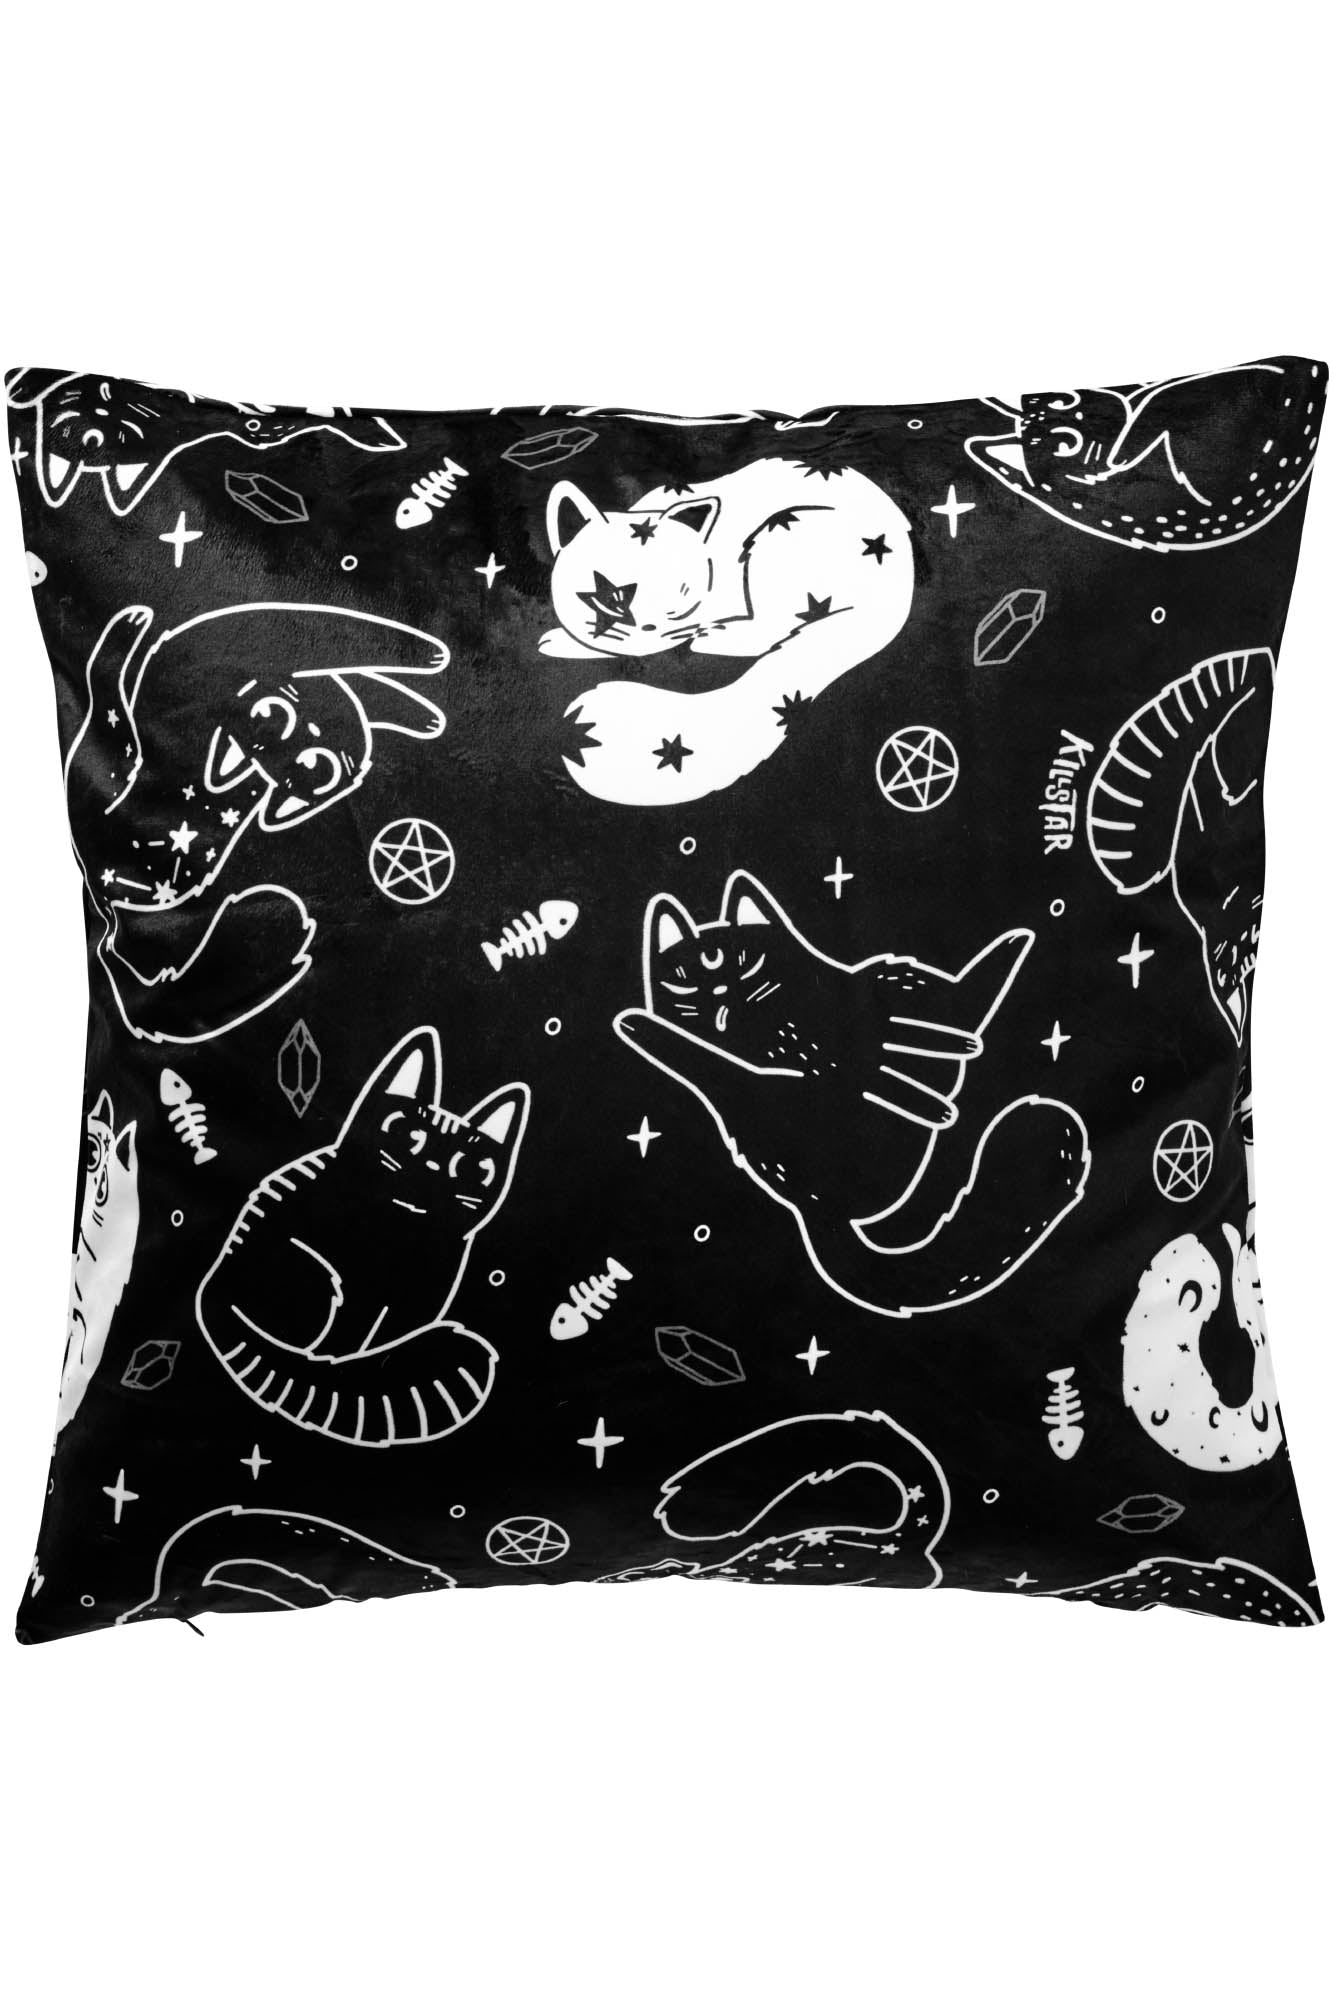 Catnap Under the Moon - Throw Pillow Cover — Shen & Sam Co.